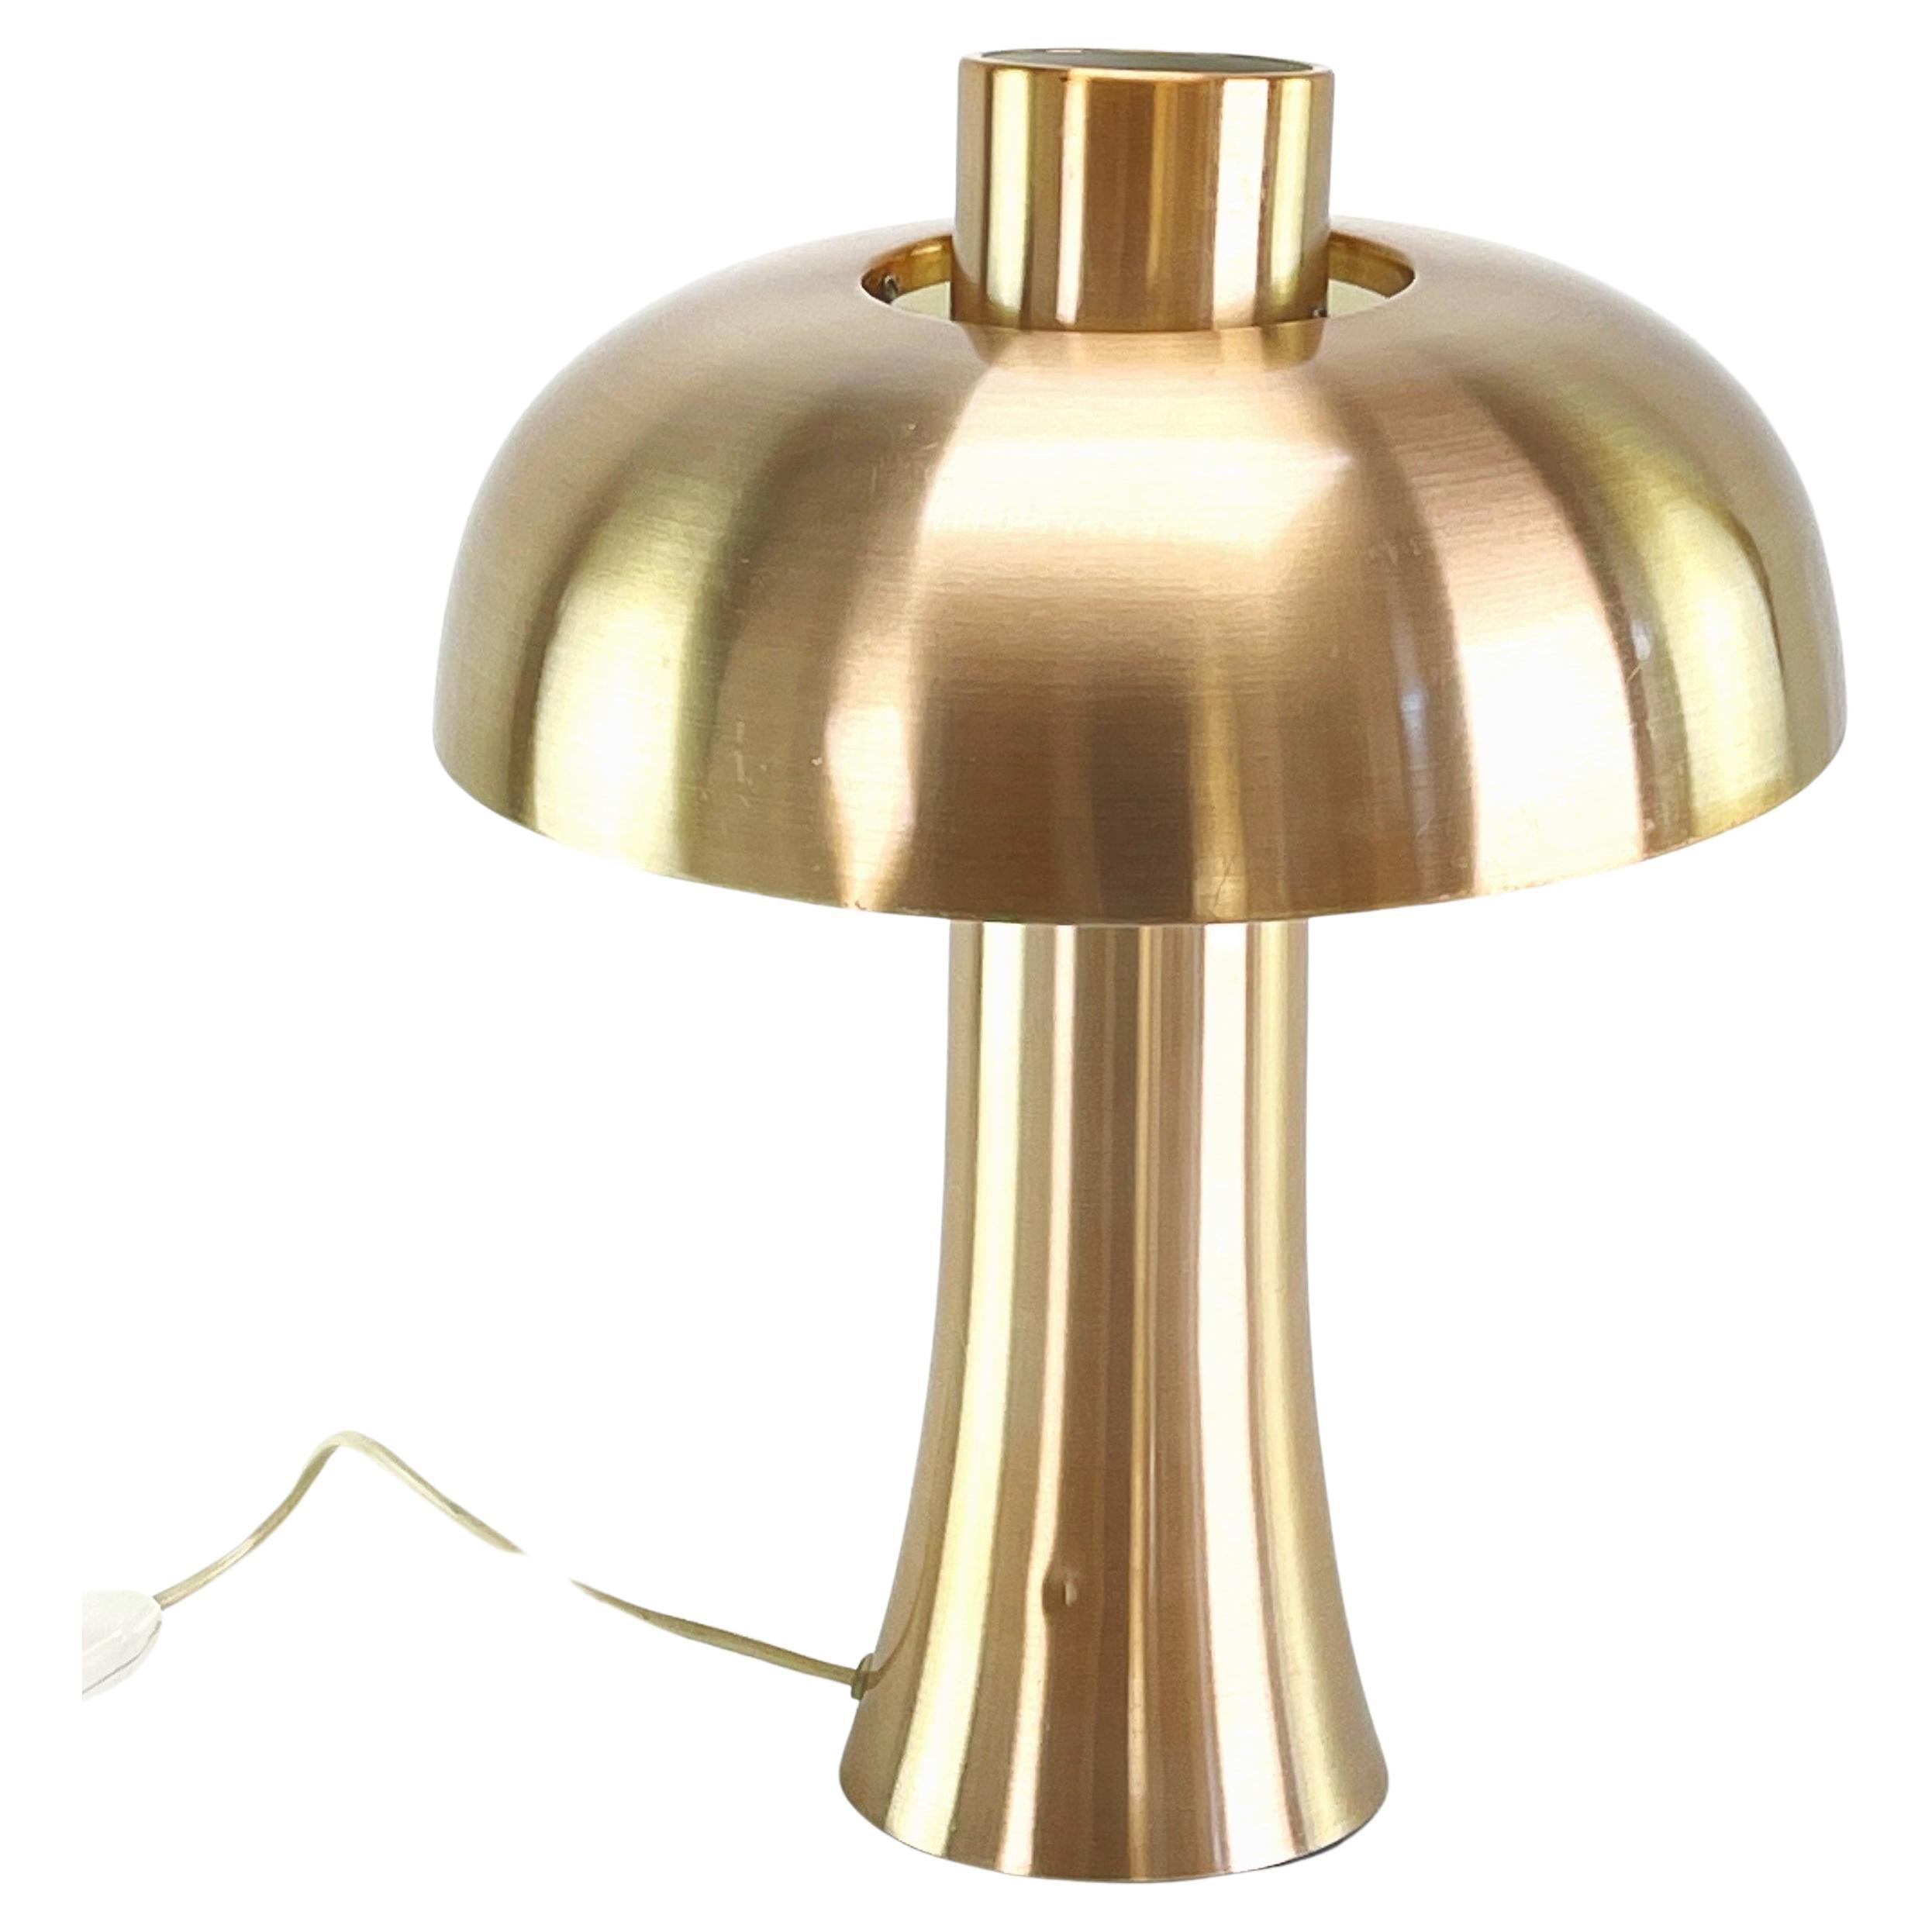  Table Mushroom Lamp, Copper-Coloured by DORIA, 1970s For Sale